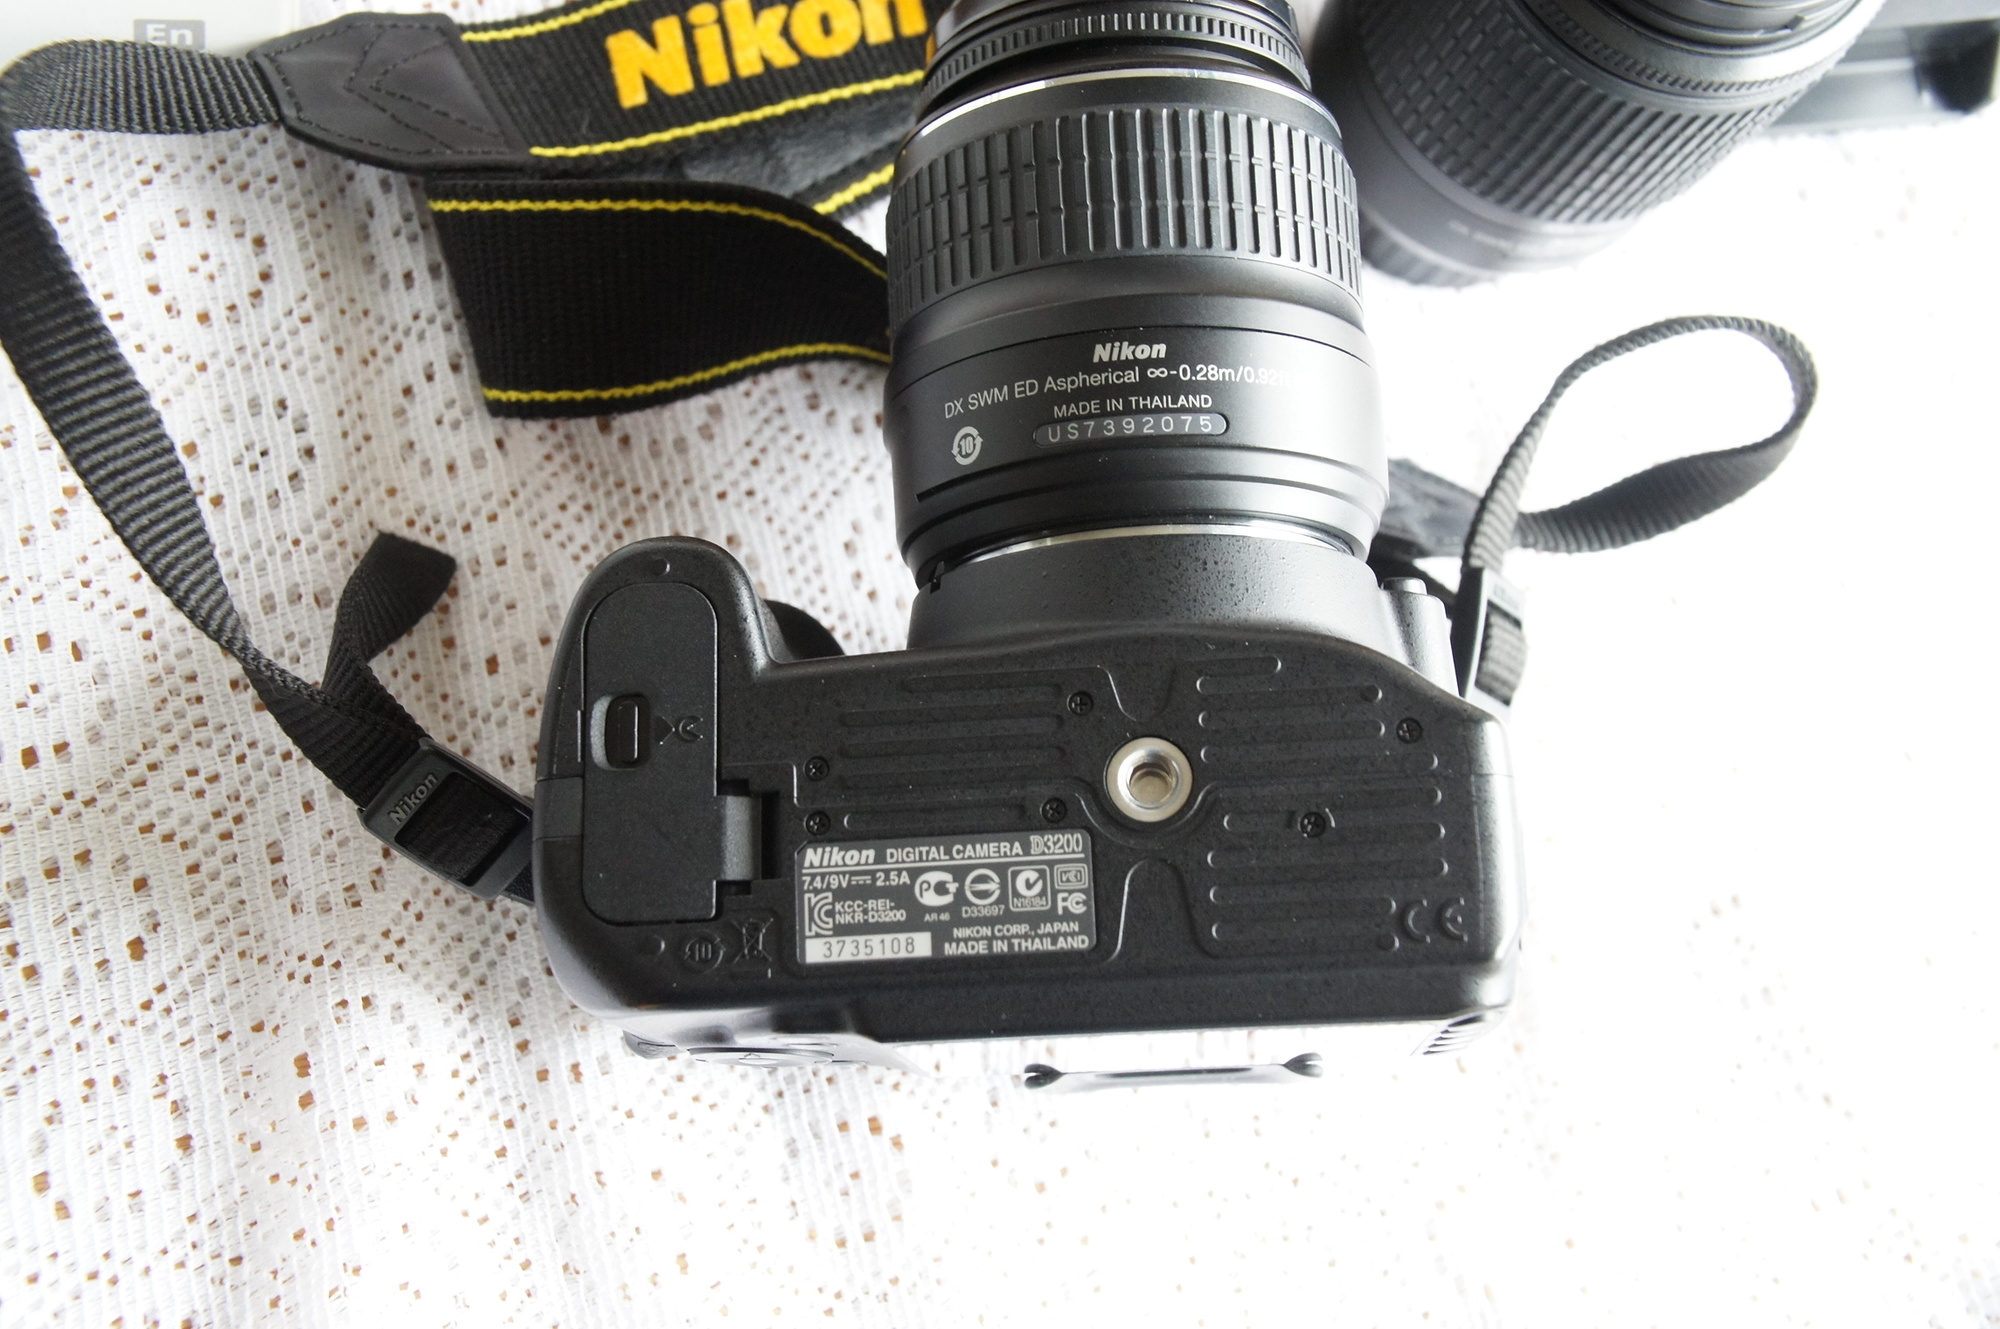 Nikon d3200 user guide